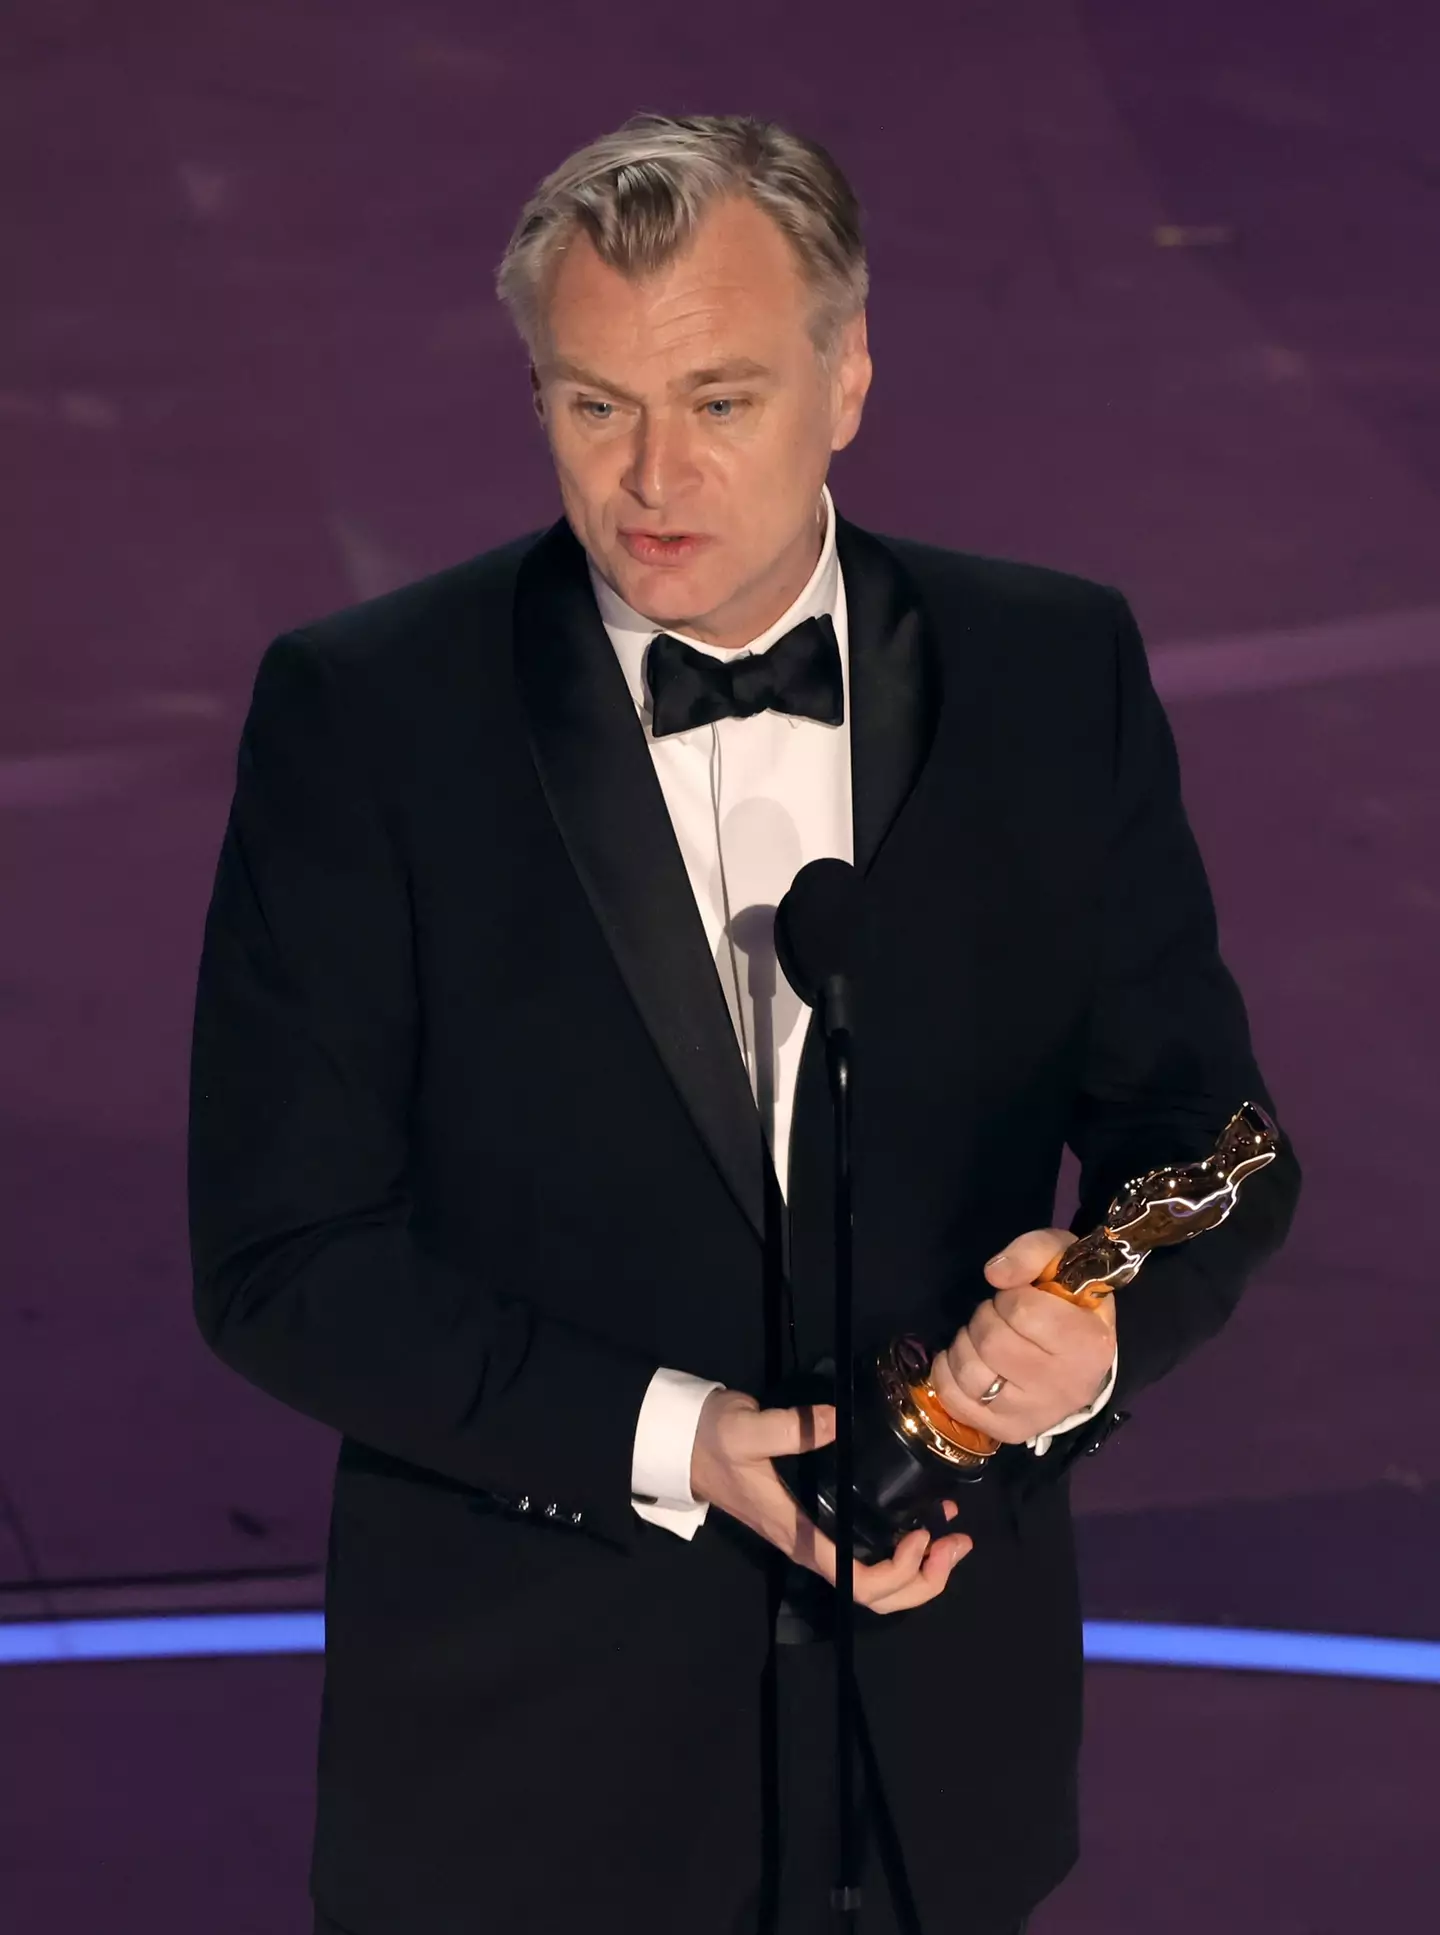 Nolan accepts Best Director.